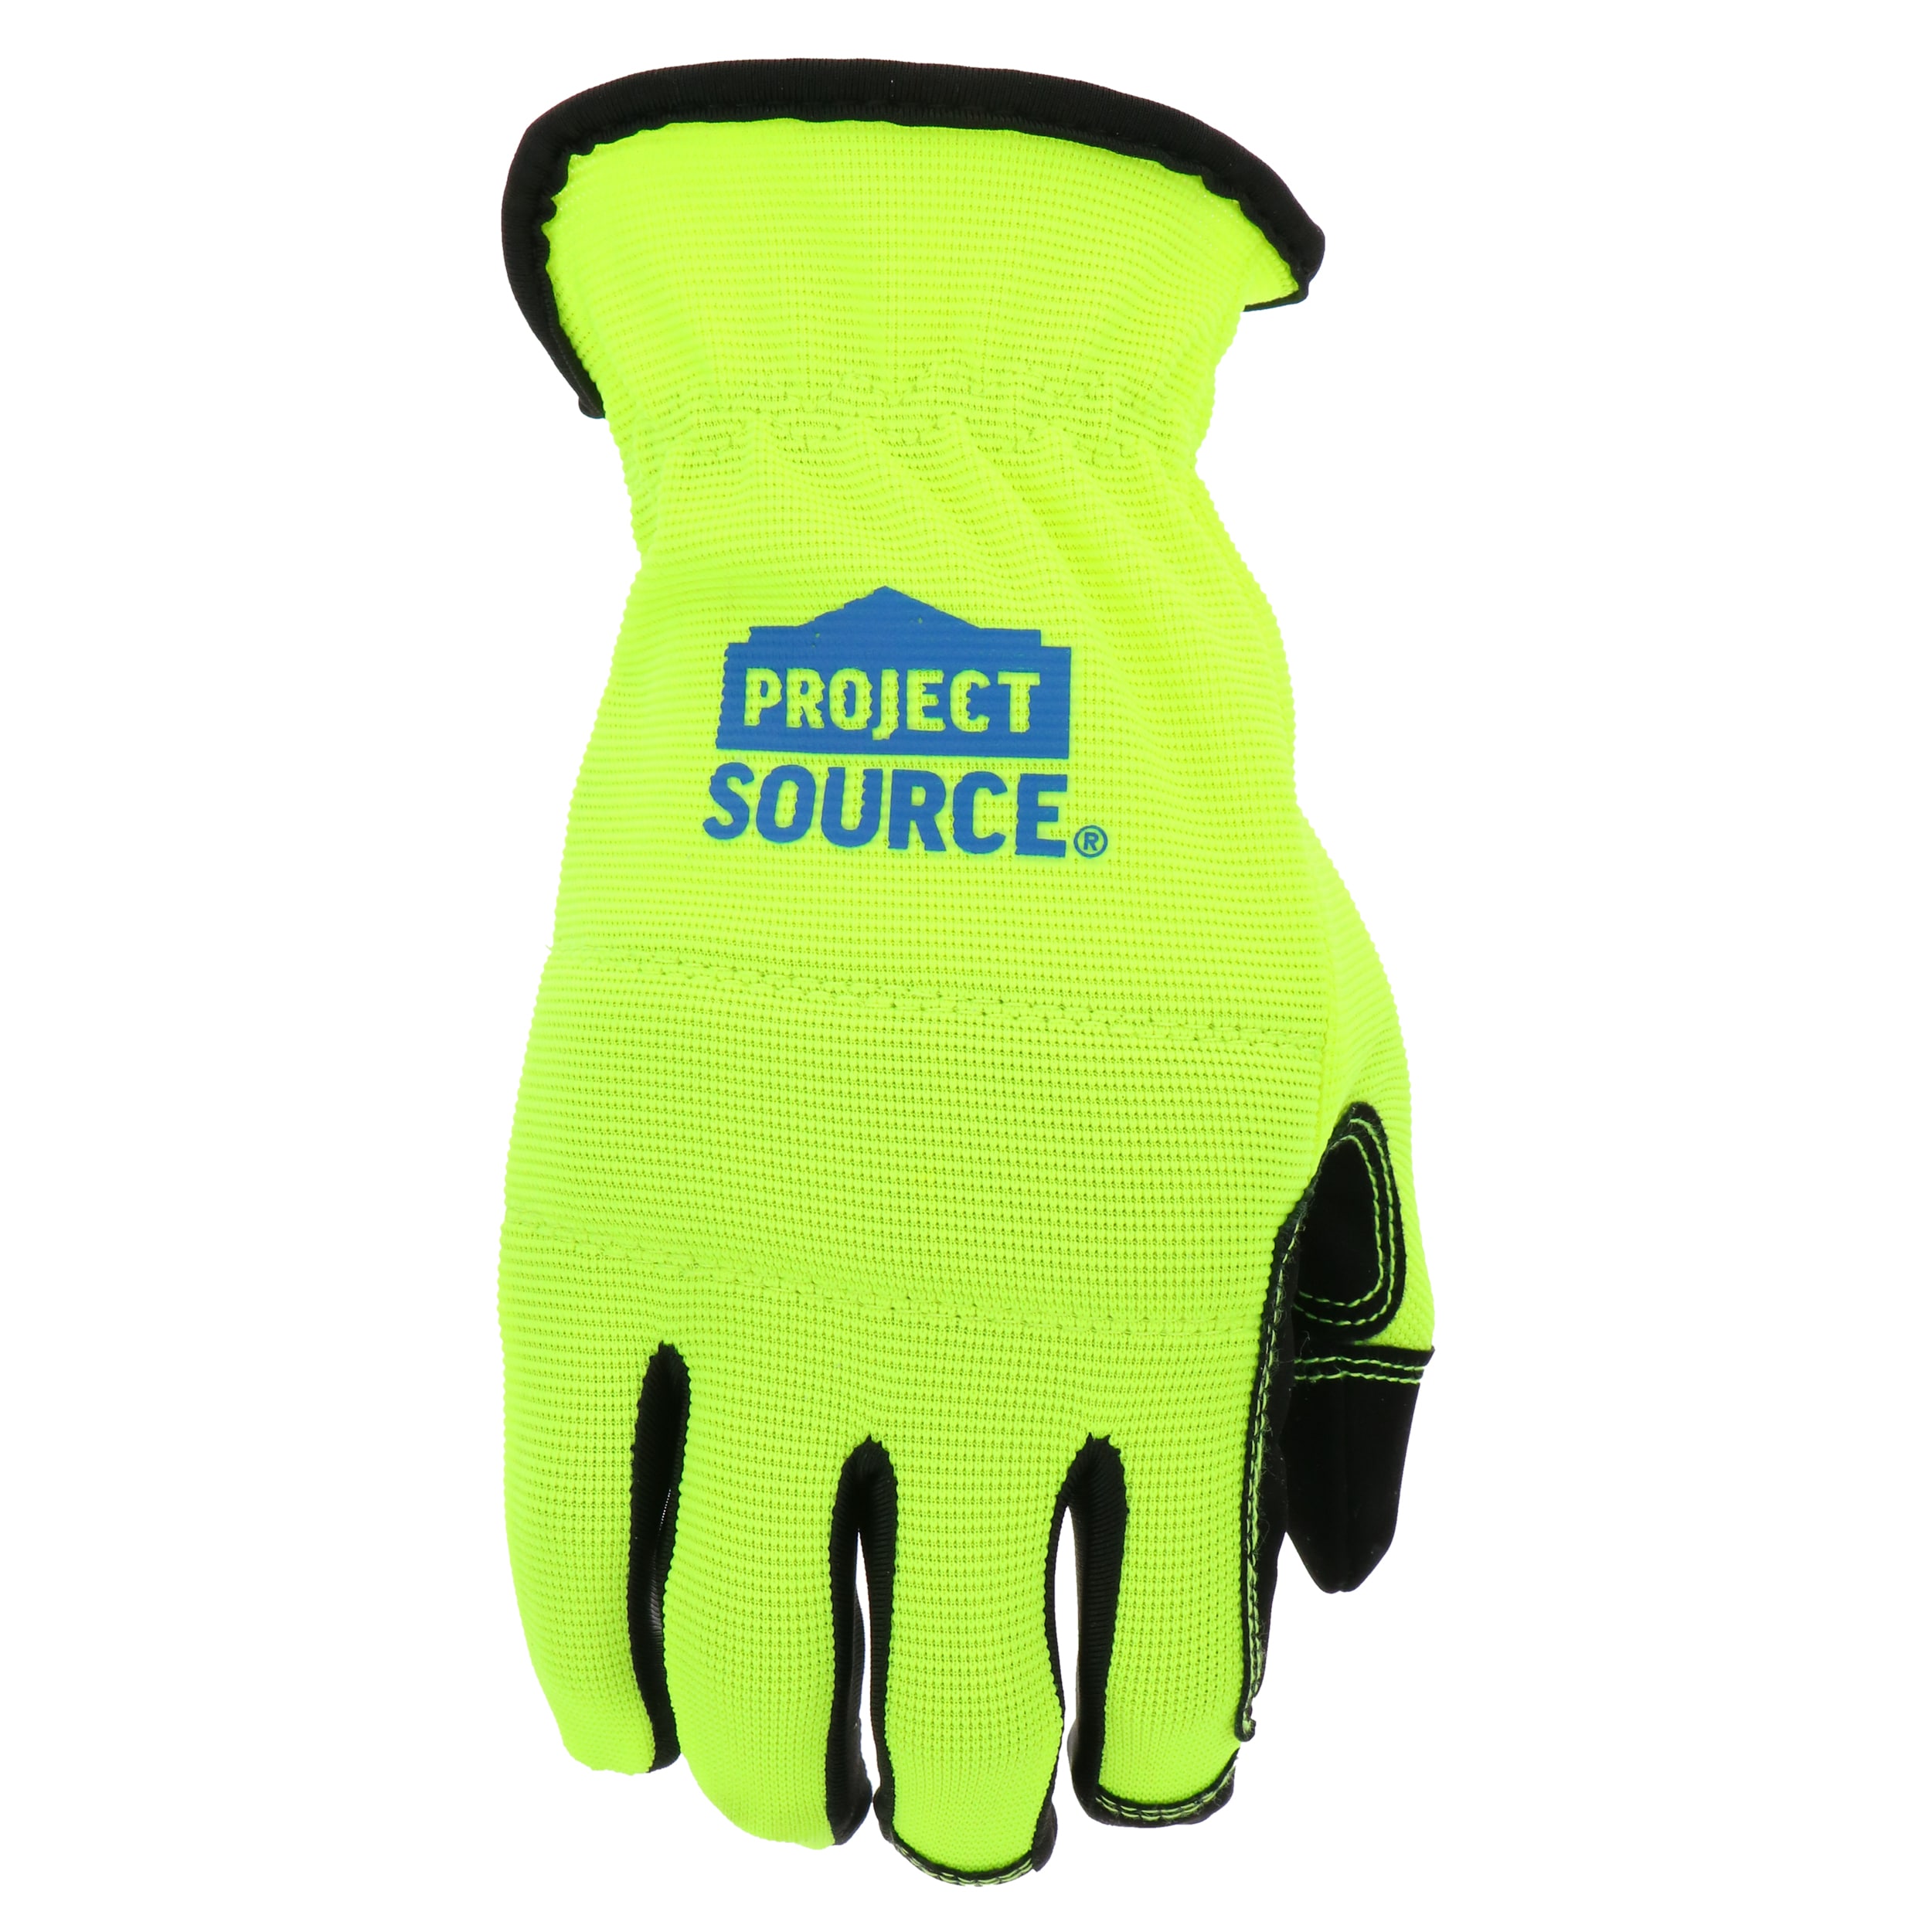 Hosa Technology A/V Work Gloves (X-Large) HGG-100-XL B&H Photo